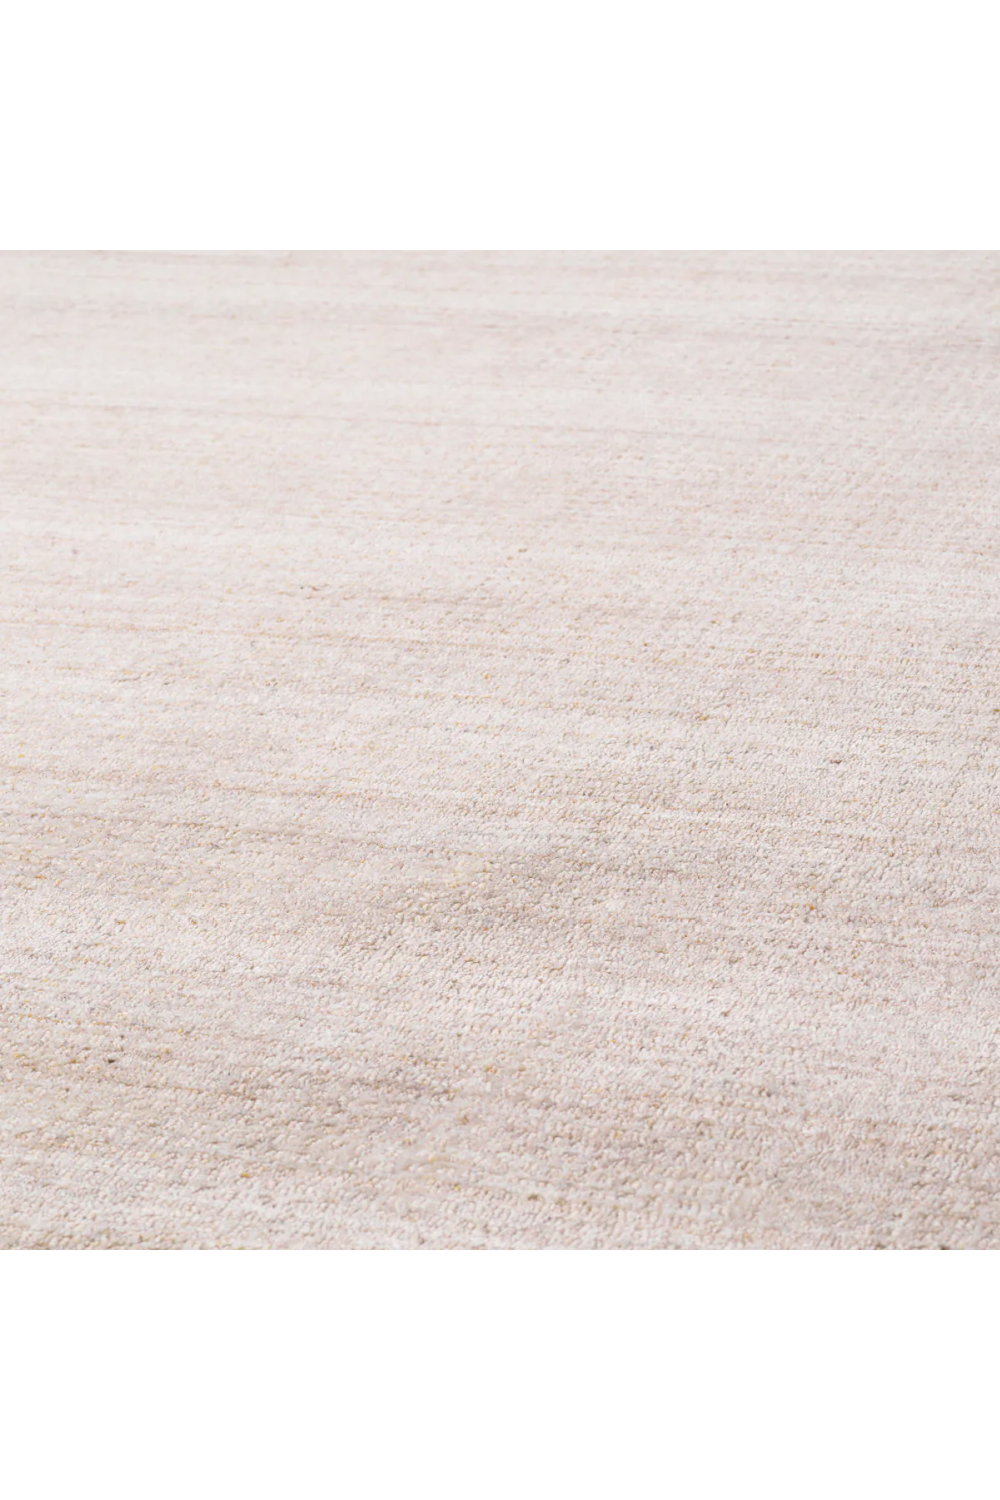 Beige Handwoven Carpet 10' x 13' | Eichholtz Pep | Oroa.com